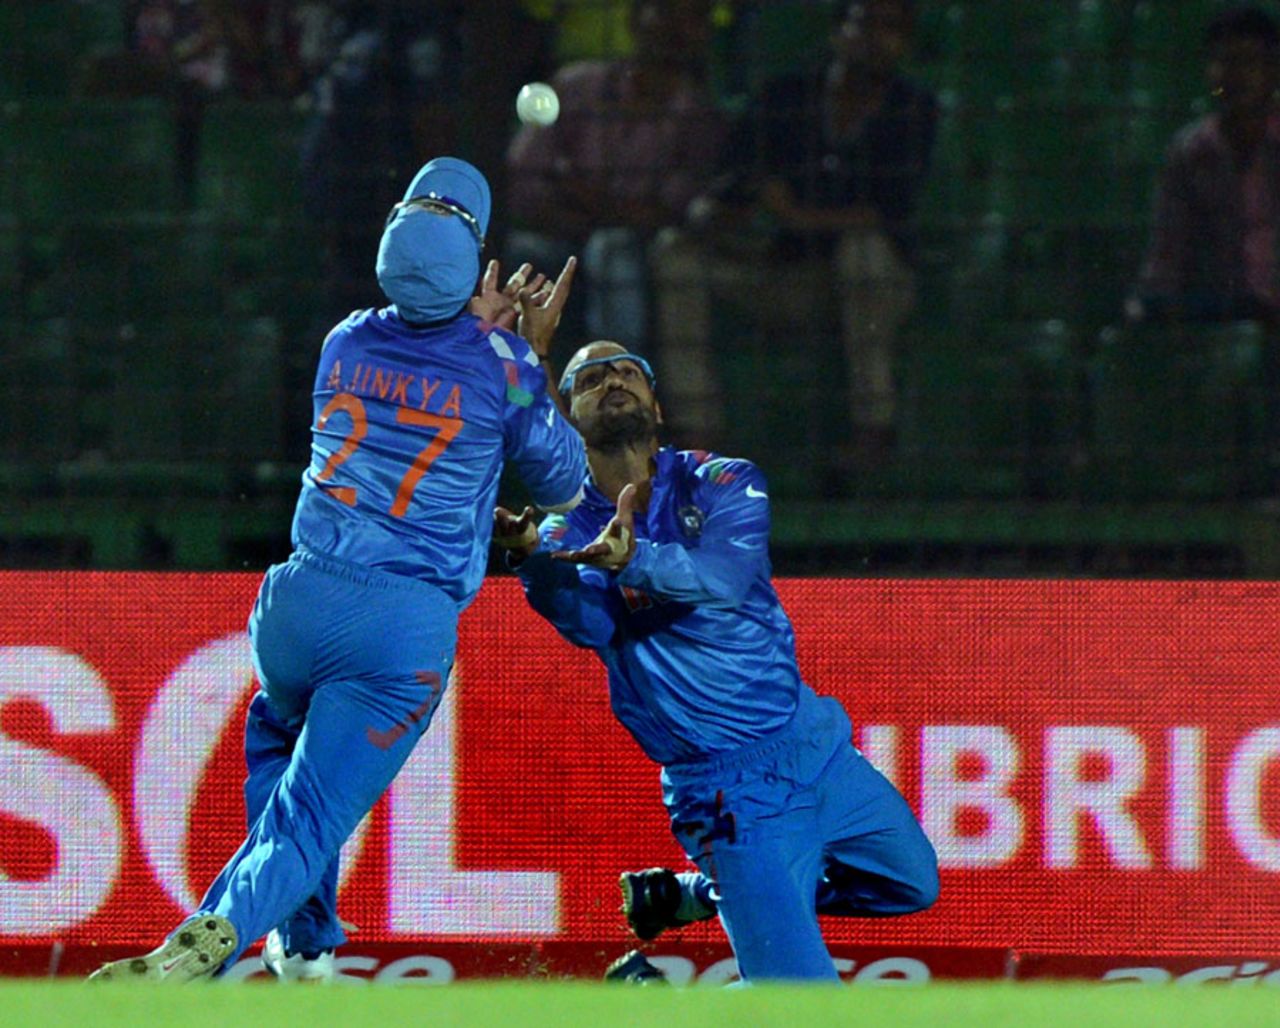 Ajinkya Rahane and Shikhar Dhawan collided as they went for a catch, India v Sri Lanka, Asia Cup, Fatullah, February 28, 2014